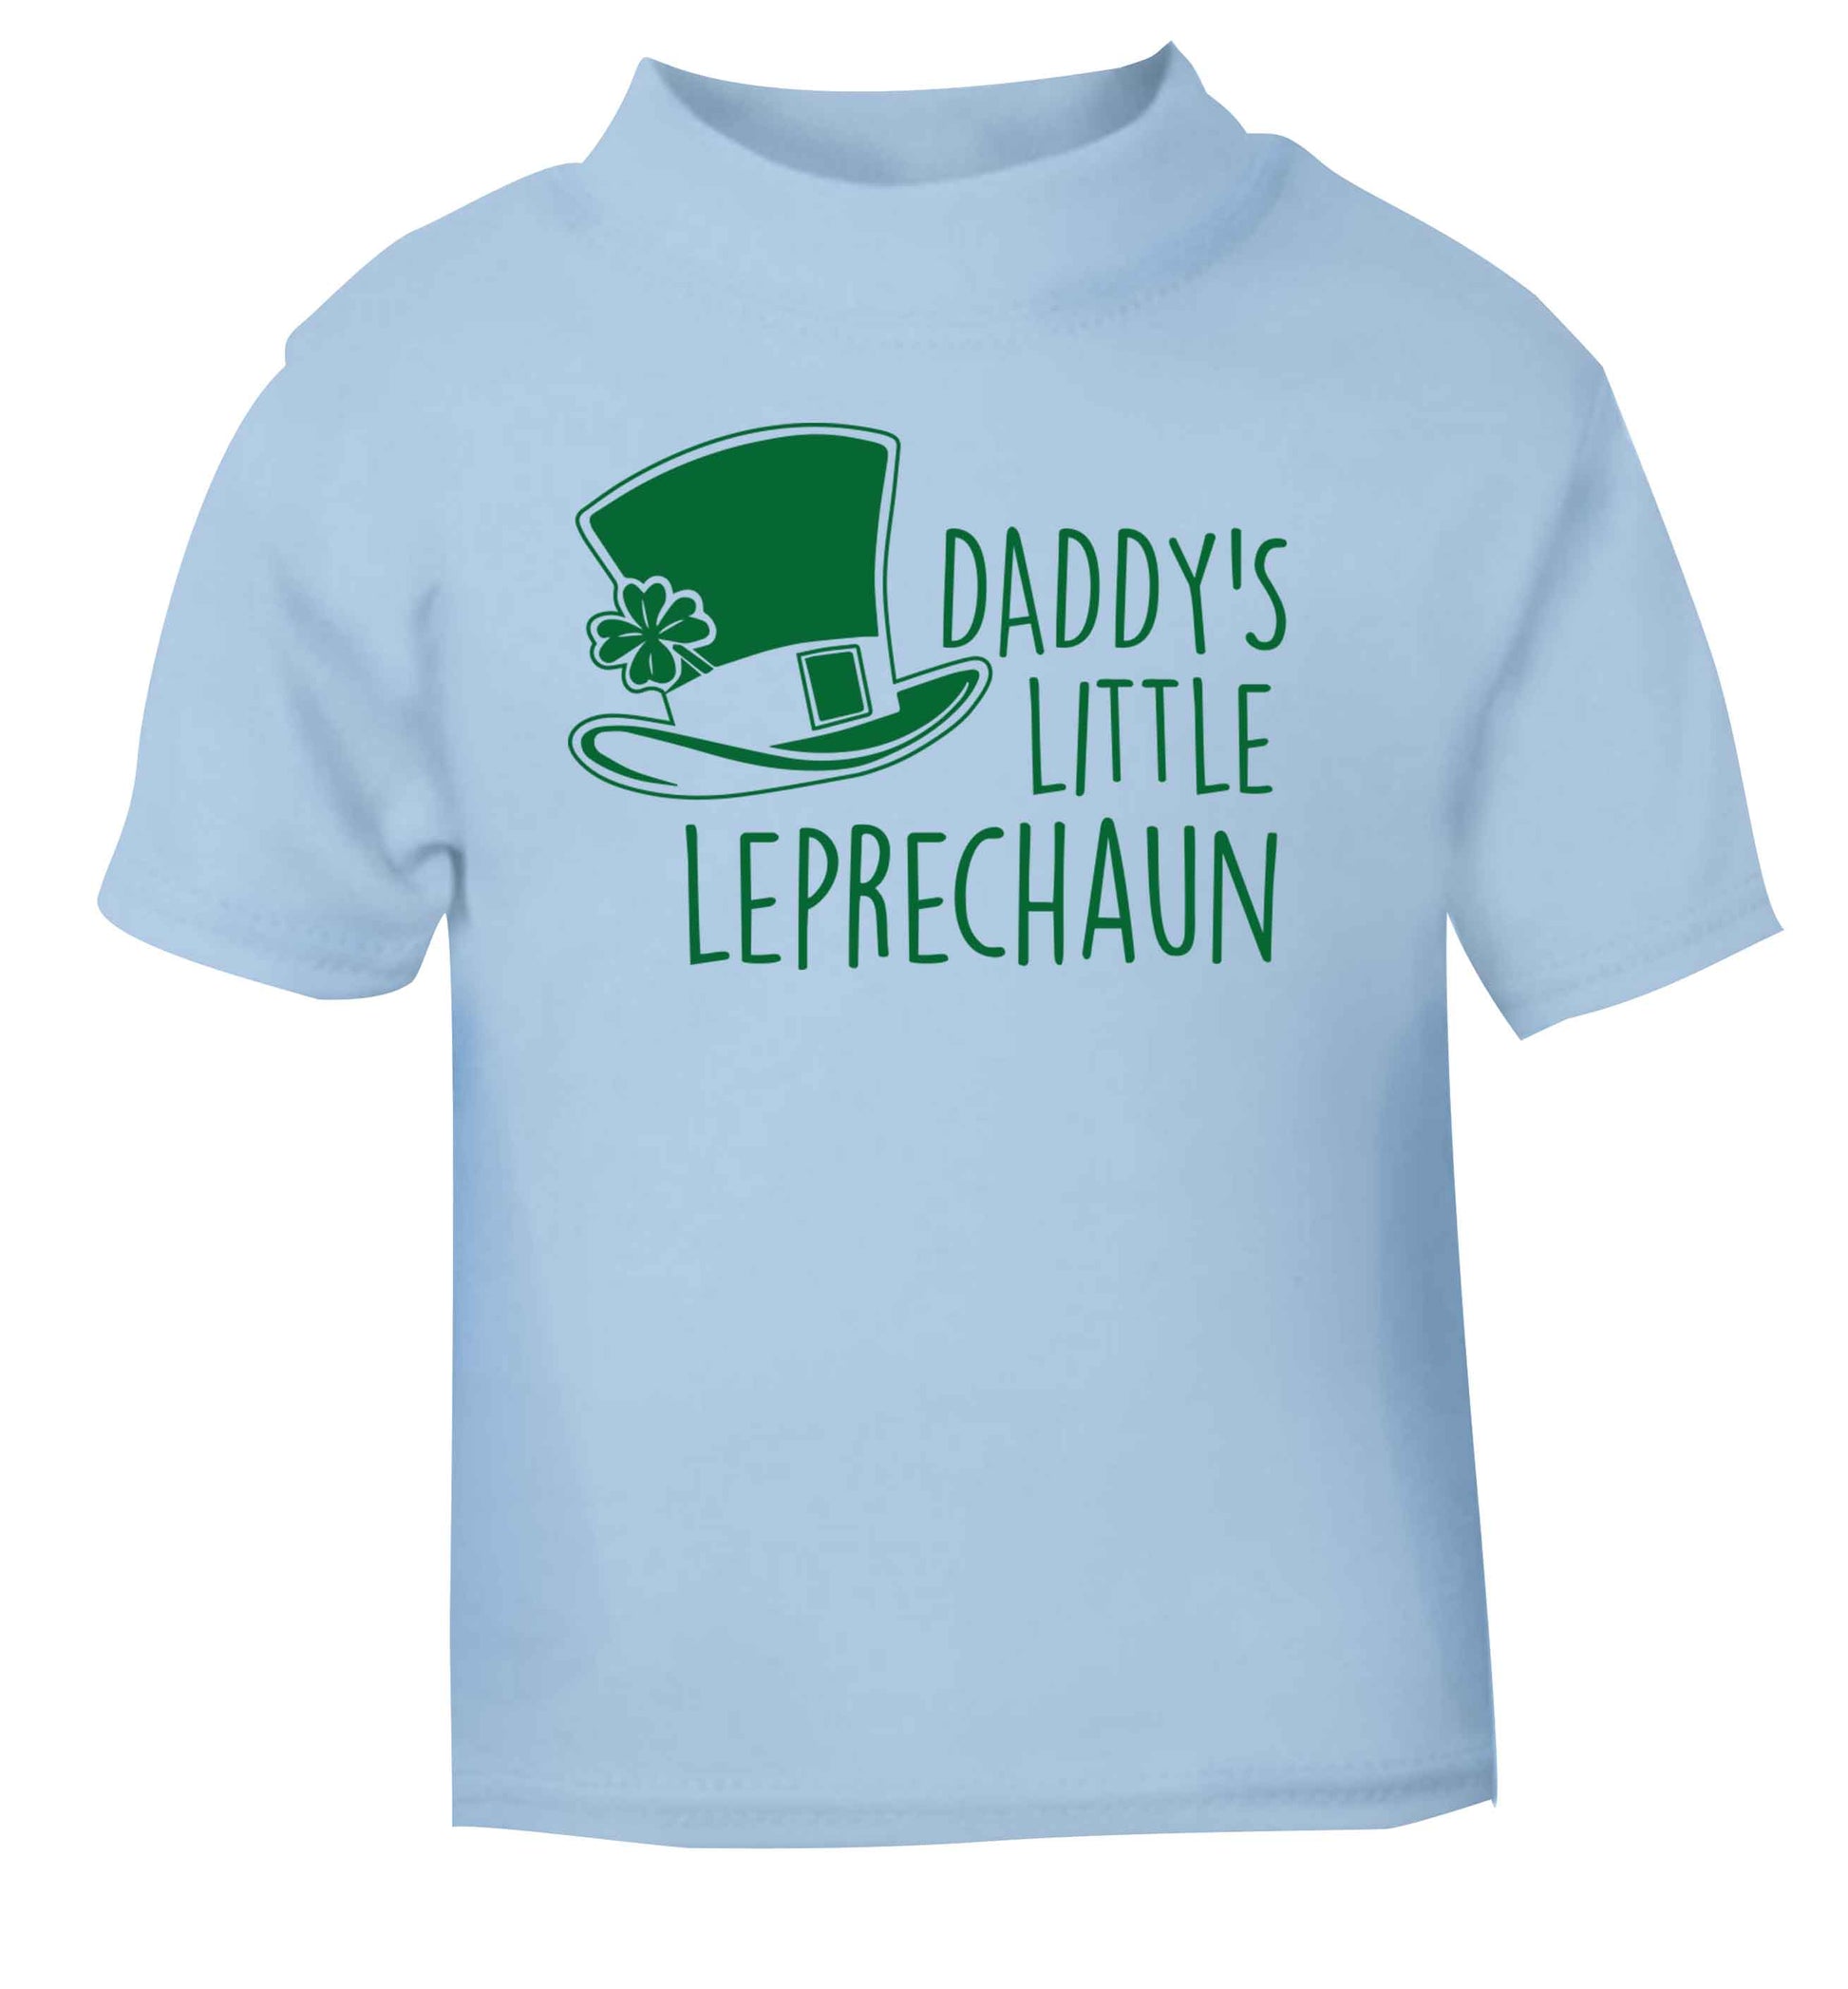 Daddy's little leprechaun light blue baby toddler Tshirt 2 Years